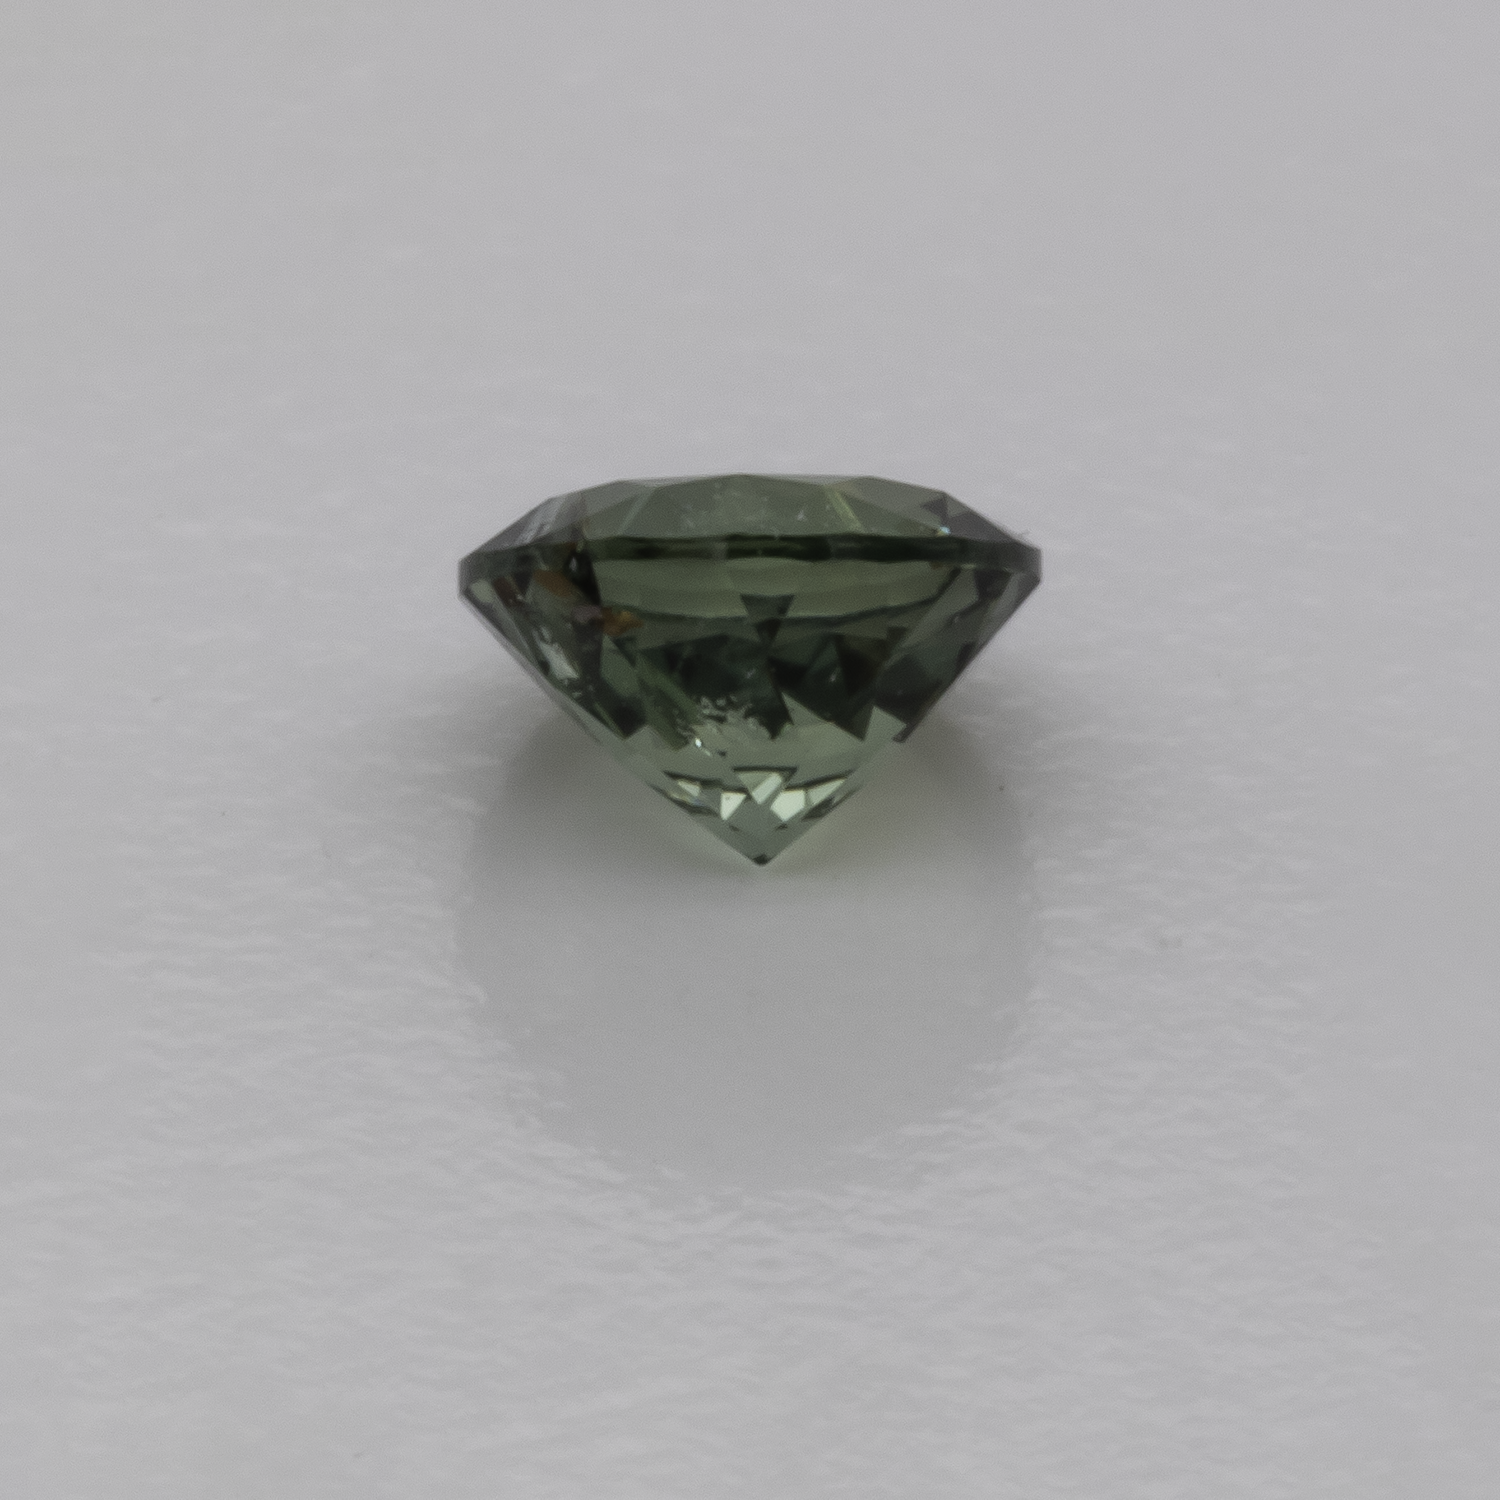 Sapphire - blue/green, round, 4.1x4.1 mm, 0.33 cts, No. XSR11209